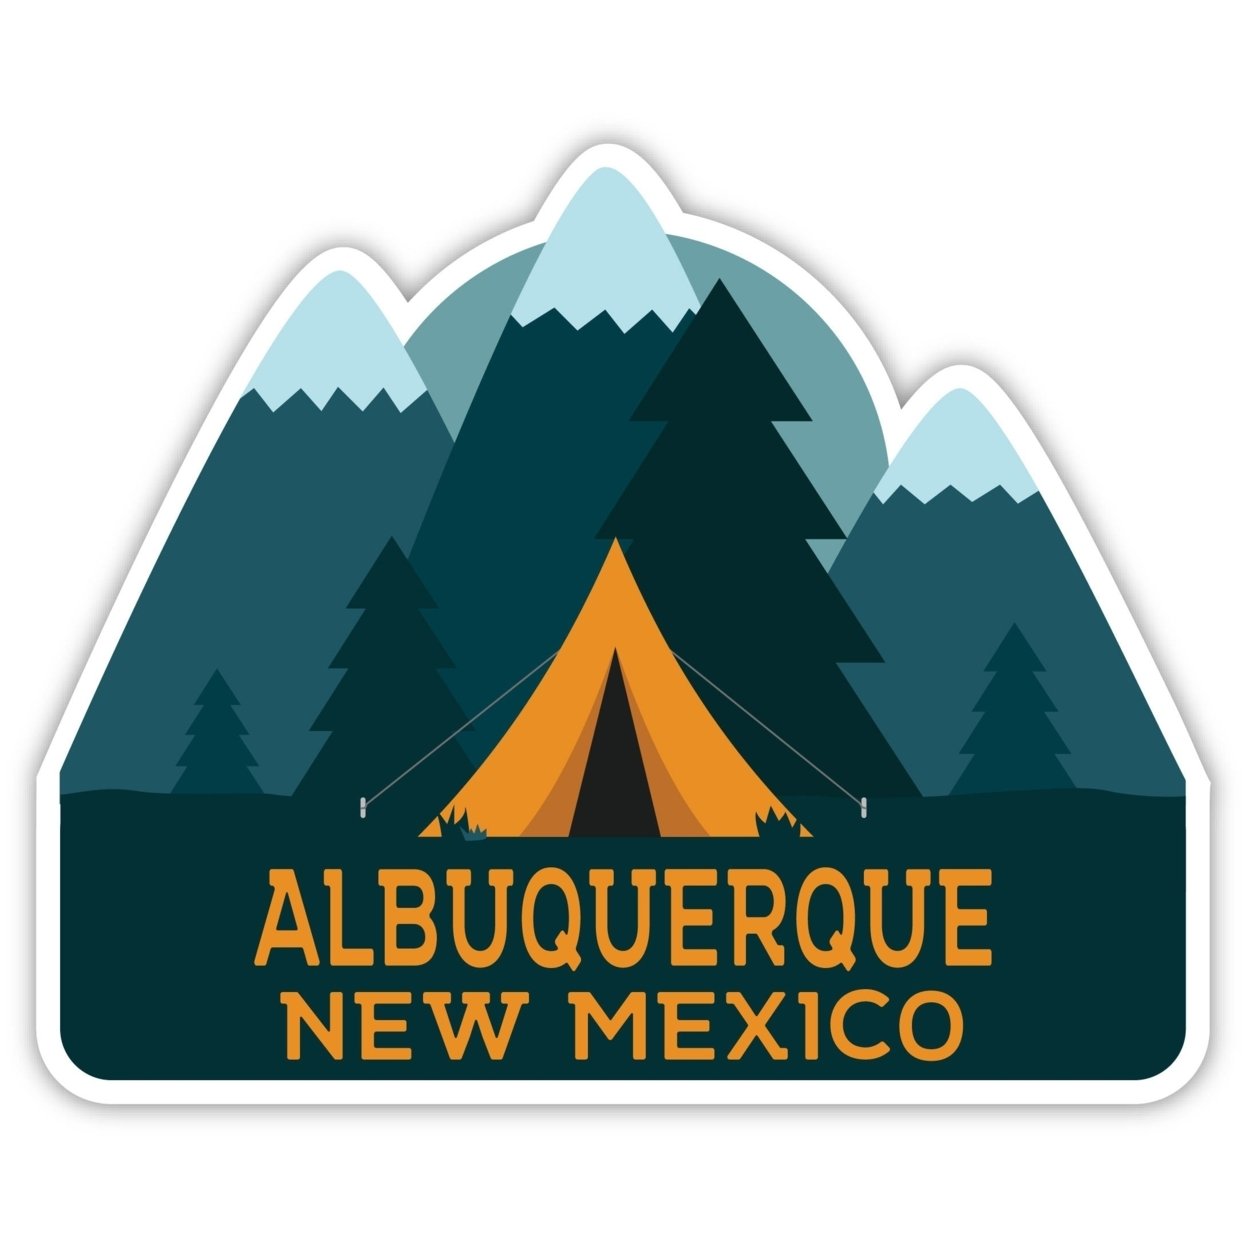 Albuquerque New Mexico Souvenir Decorative Stickers (Choose Theme And Size) - 4-Pack, 2-Inch, Tent